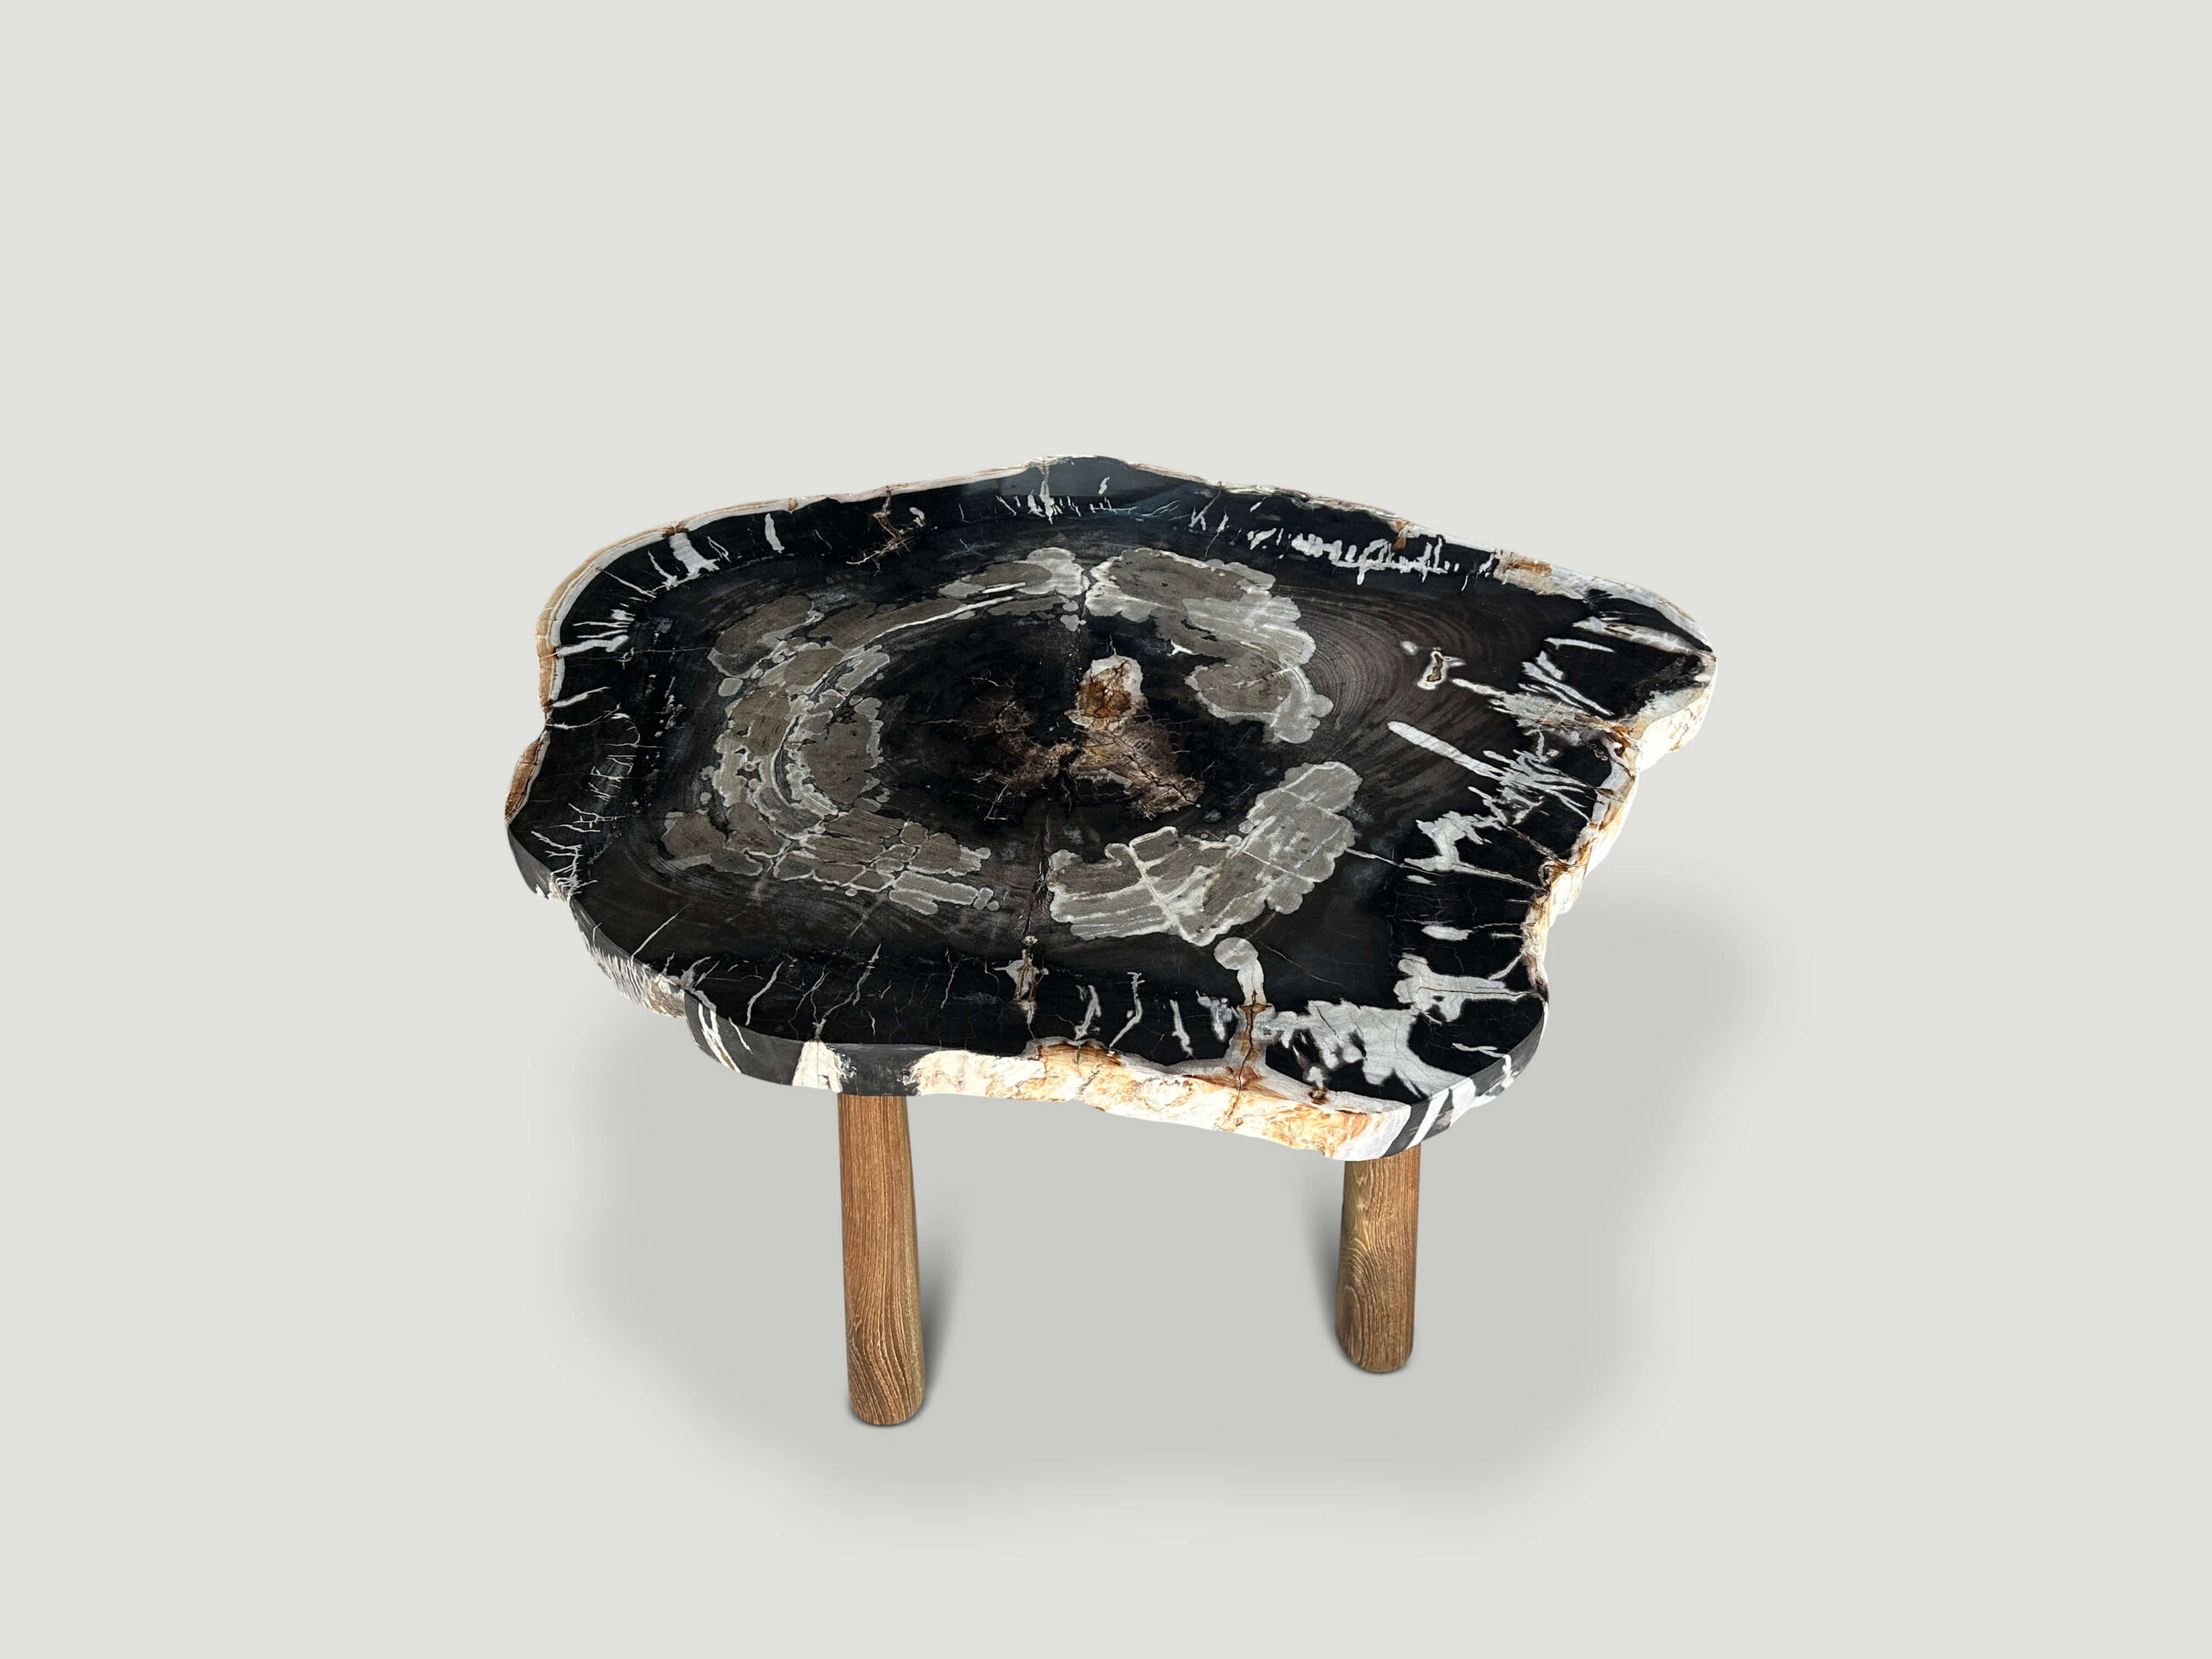 live edge petrified wood slab coffee table or side table